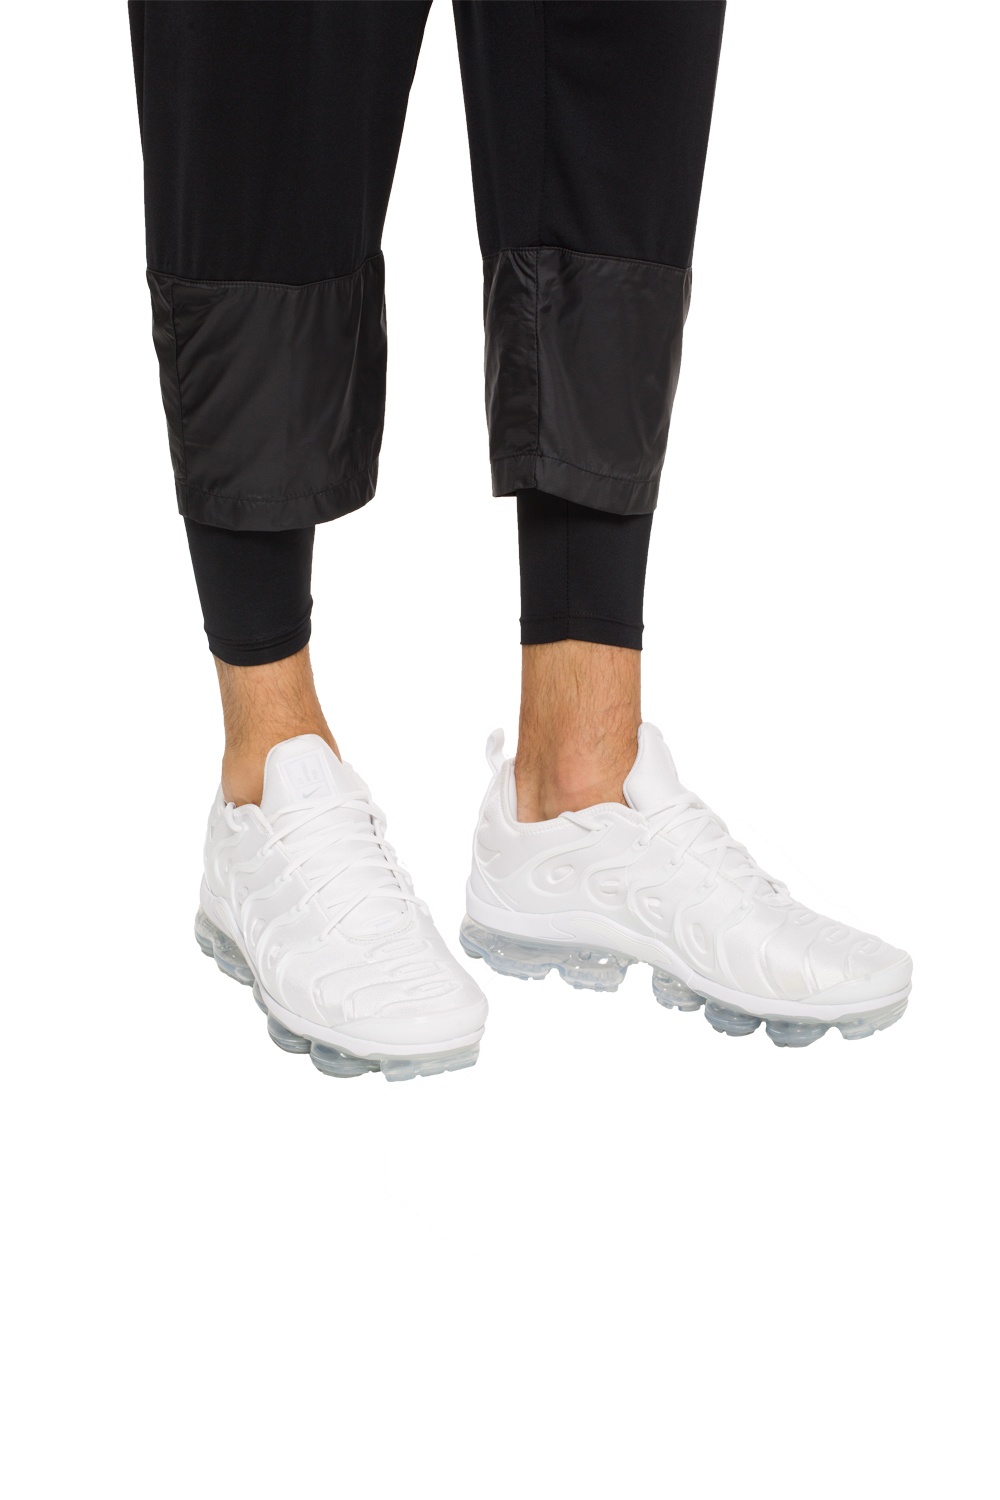 white air vapormax plus sneakers